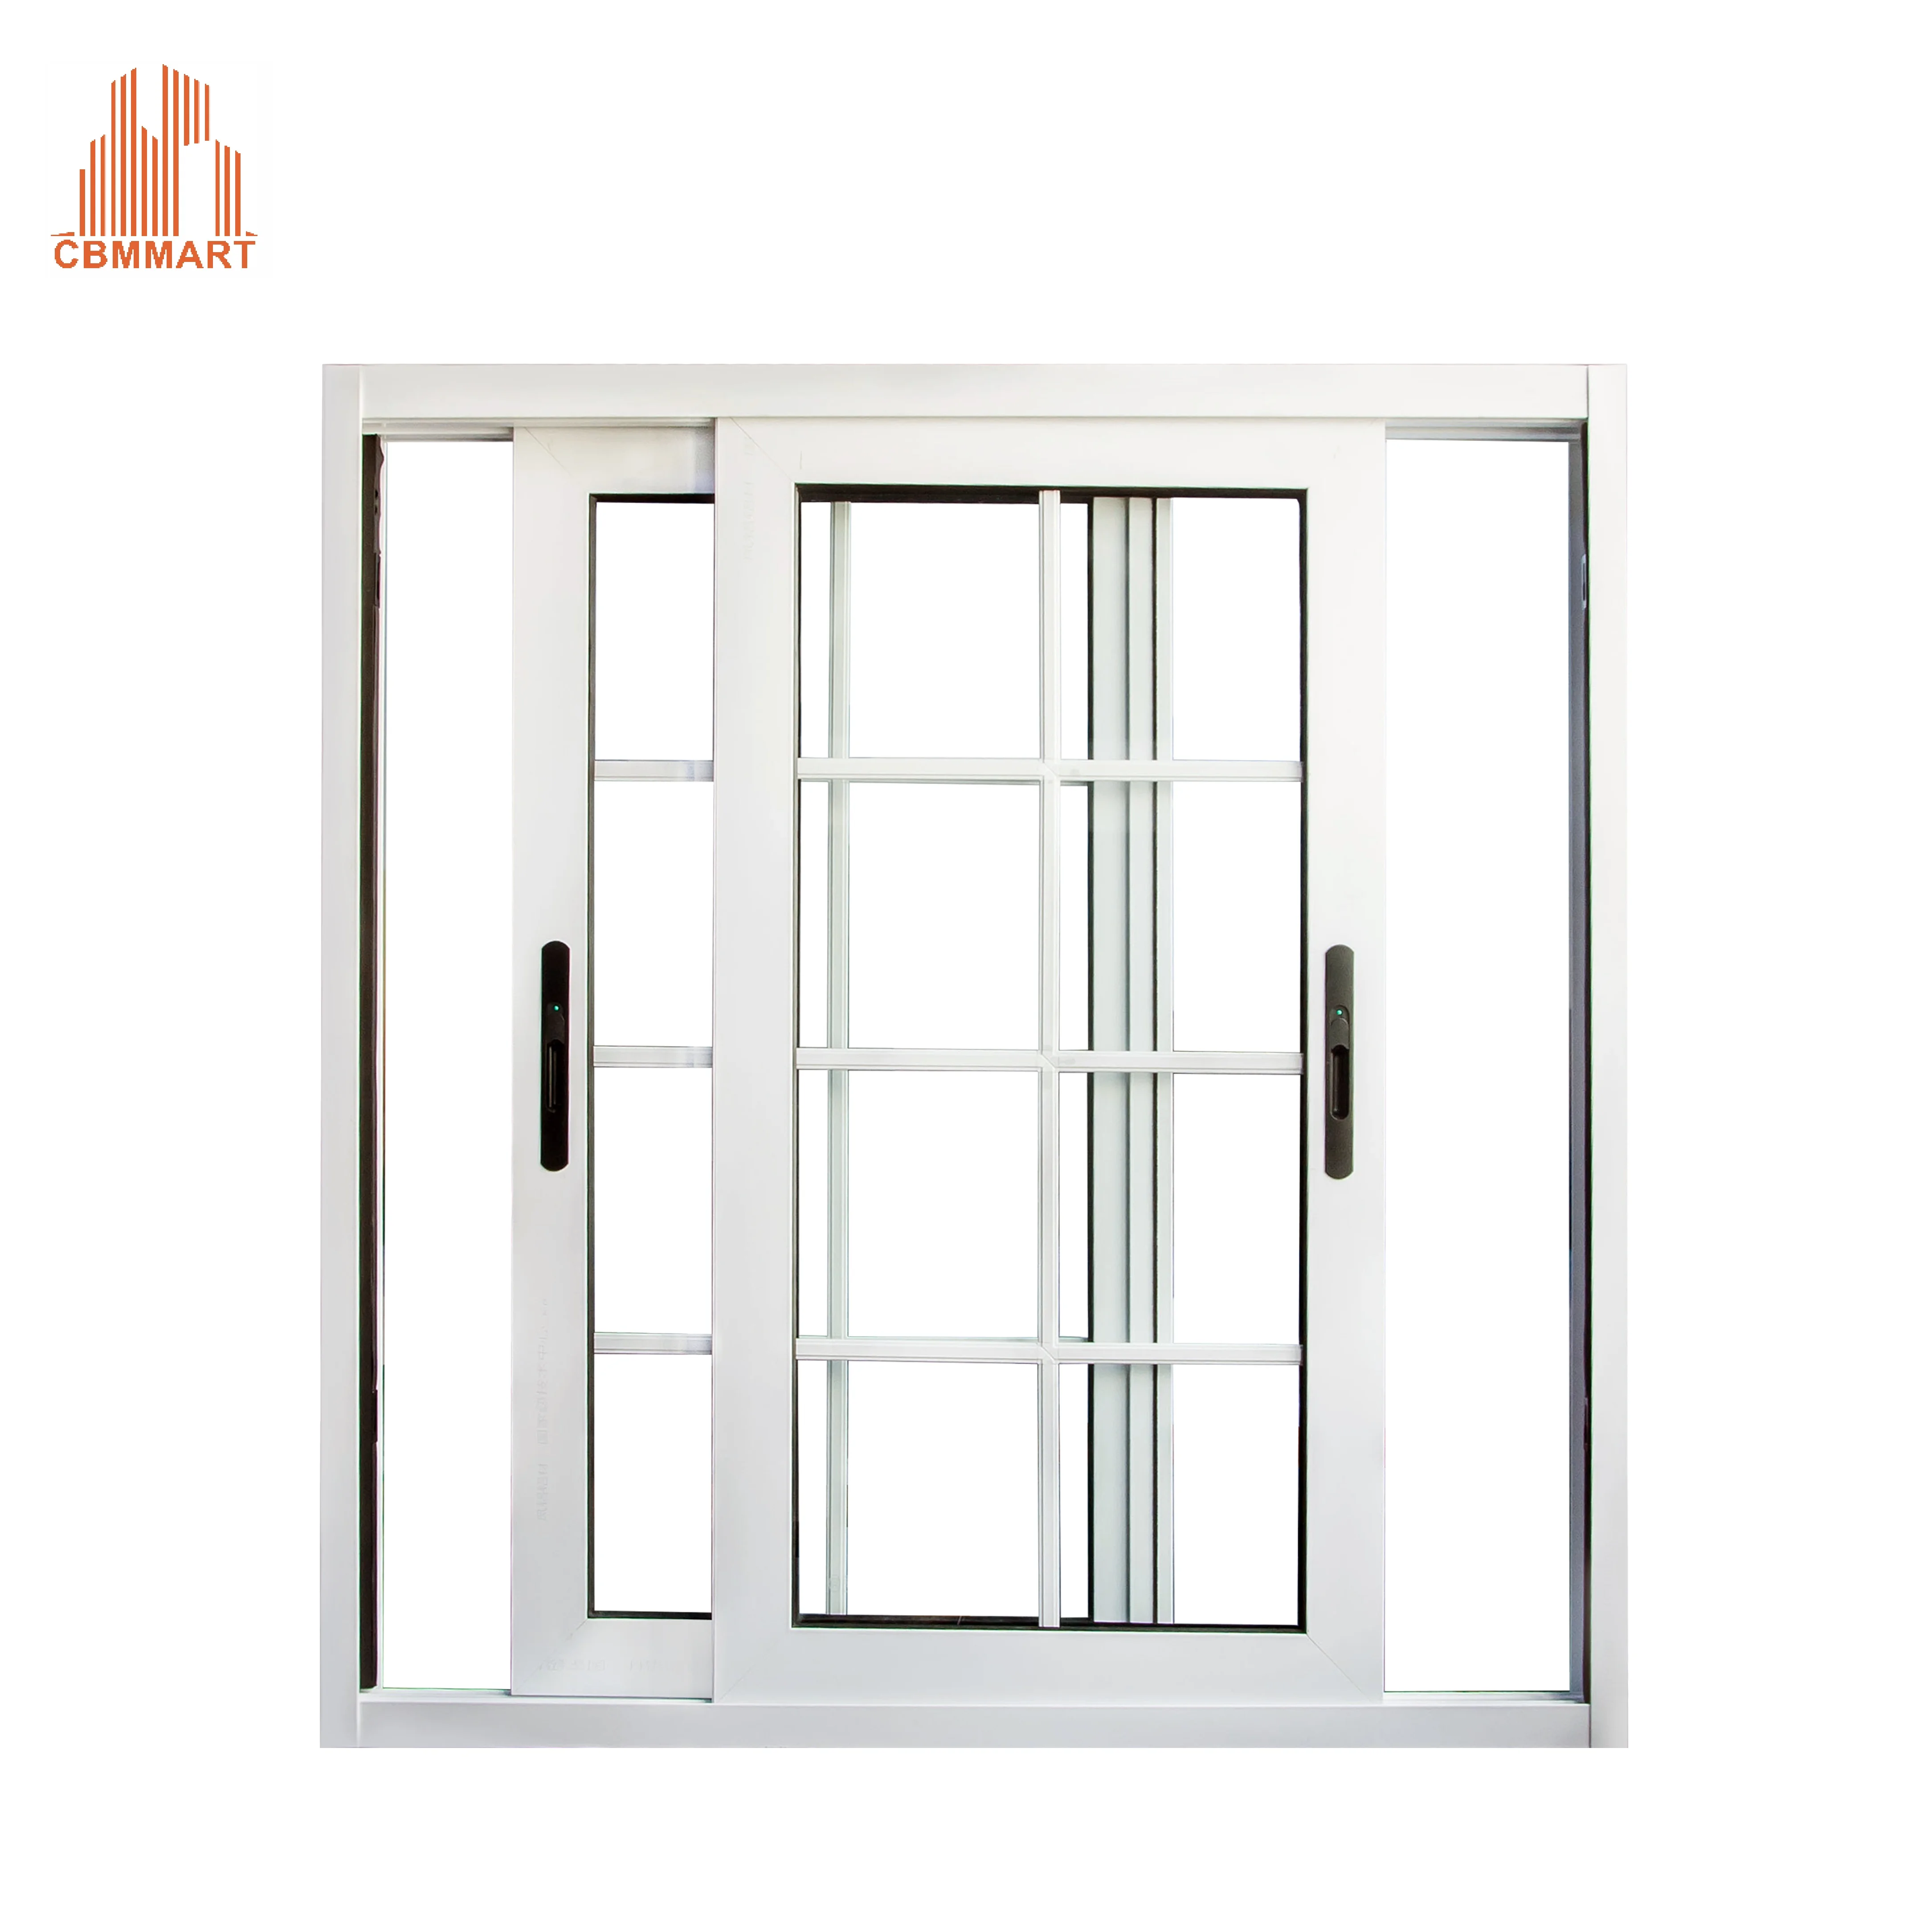 Favored frameless glass folding sliding terrace glazing door with fully open style